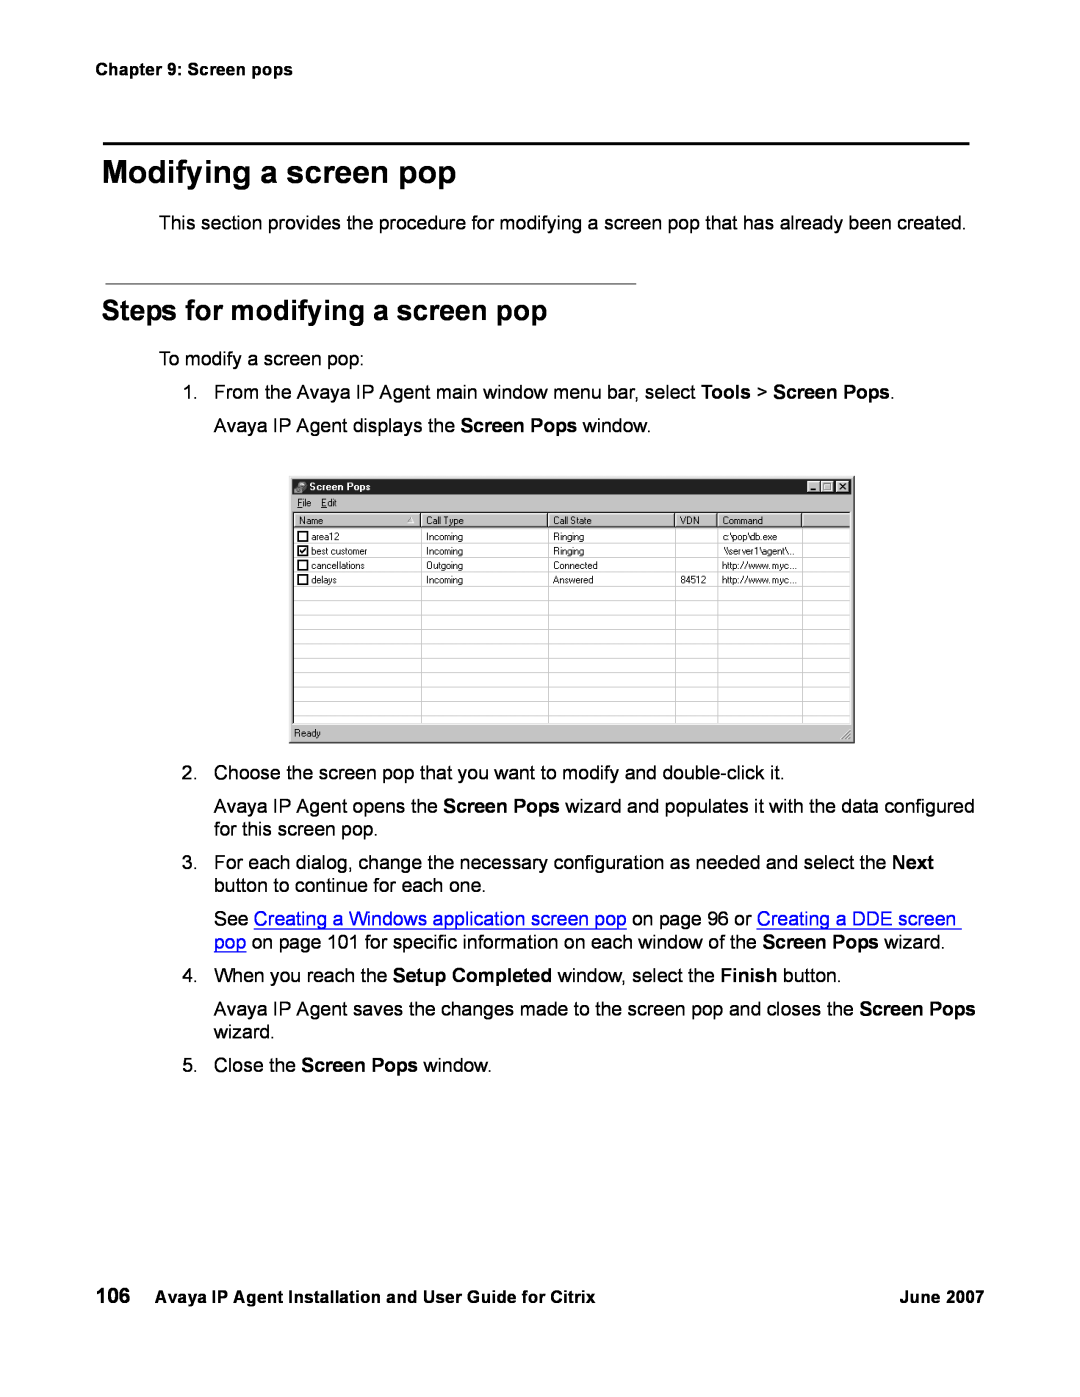 Avaya 7 manual Modifying a screen pop, Steps for modifying a screen pop 